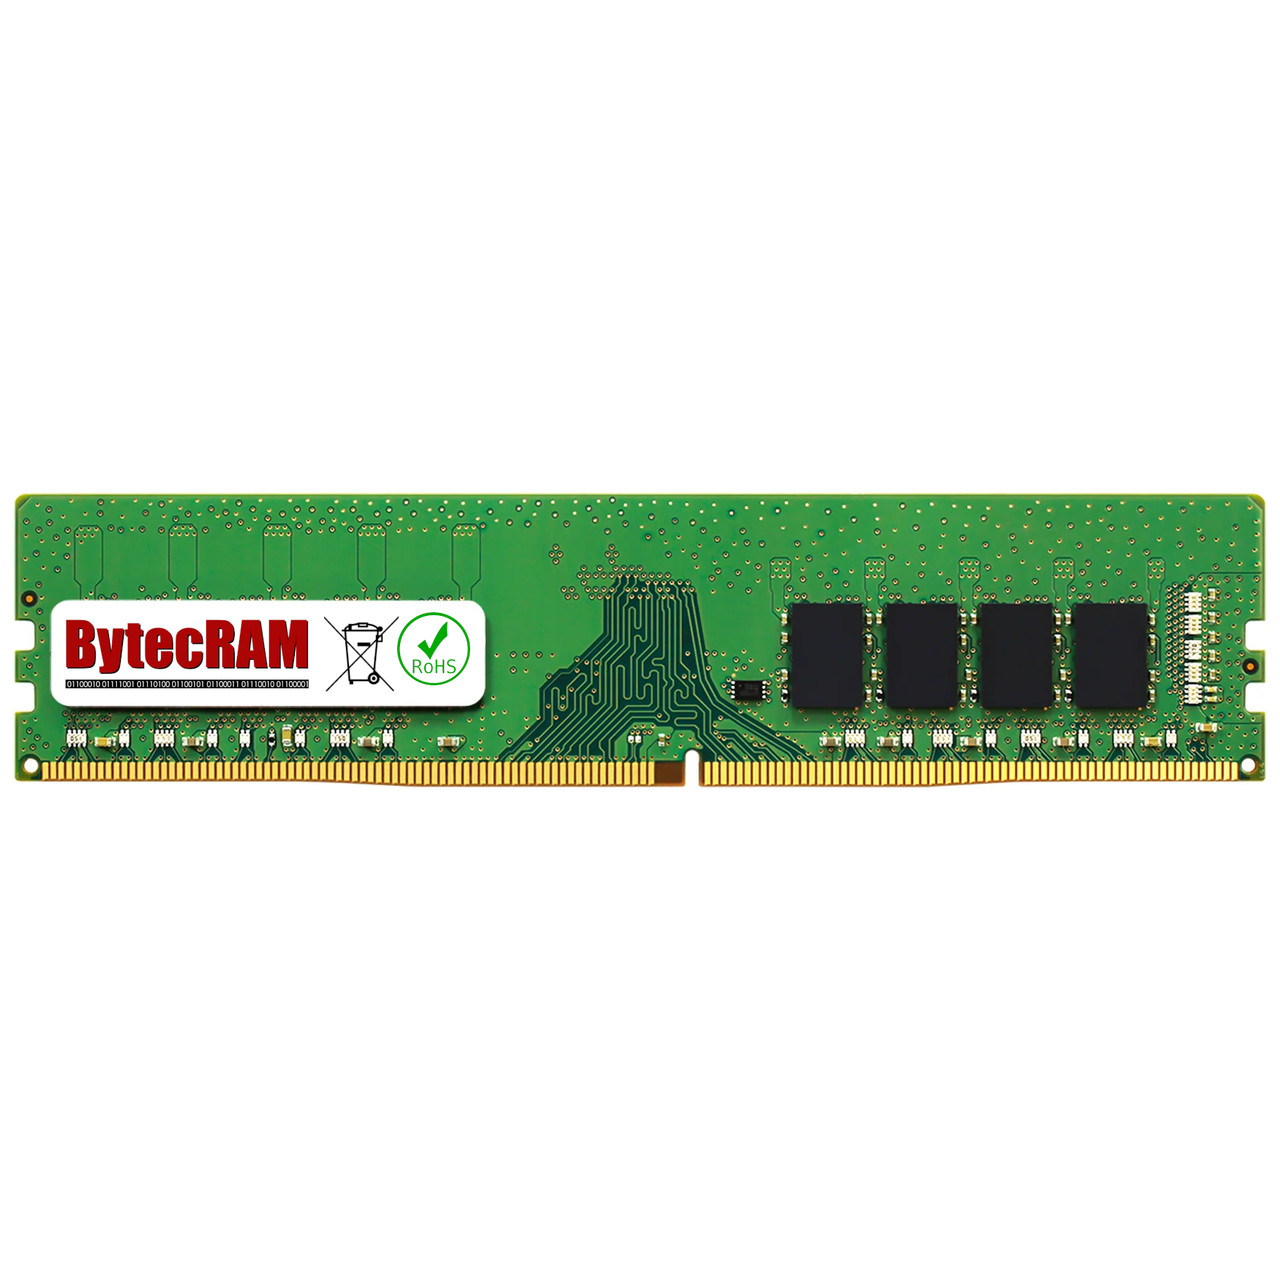 eBay*16GB Dell Inspiron 3880 MT DDR4 3200MHz UDIMM Memory RAM Upgrade